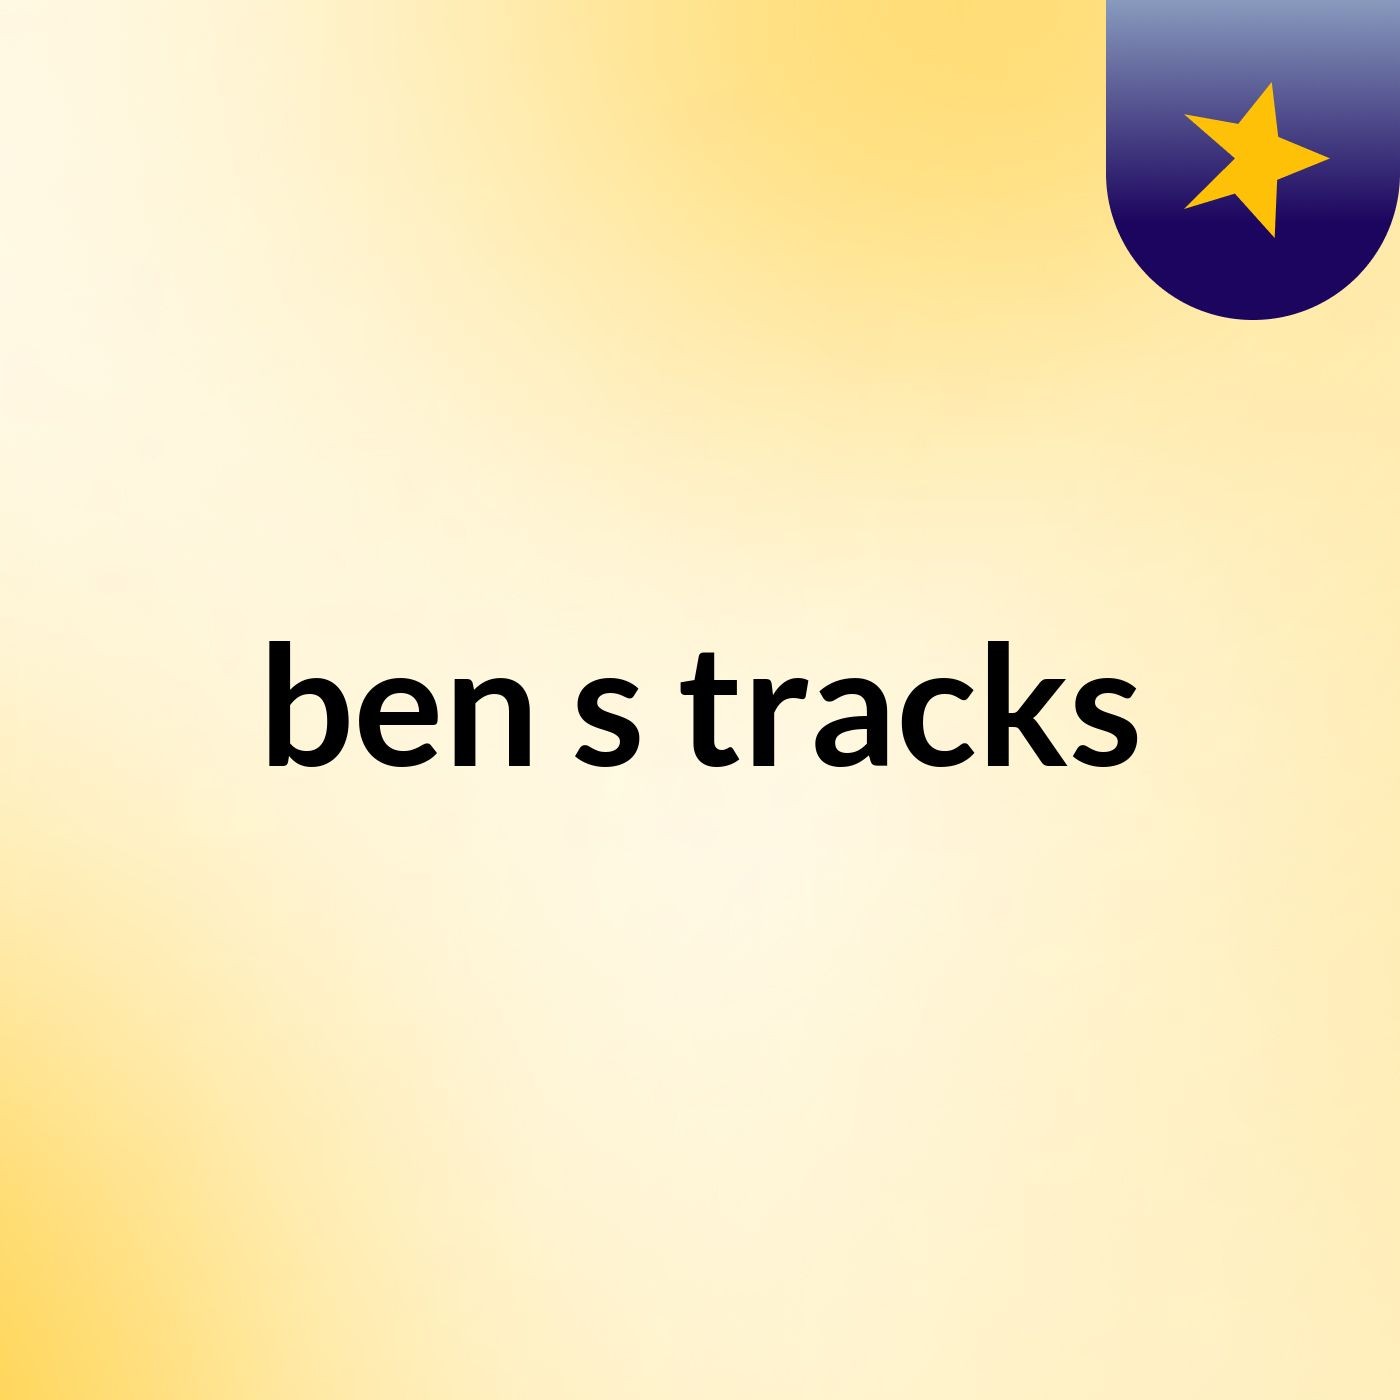 ben's tracks